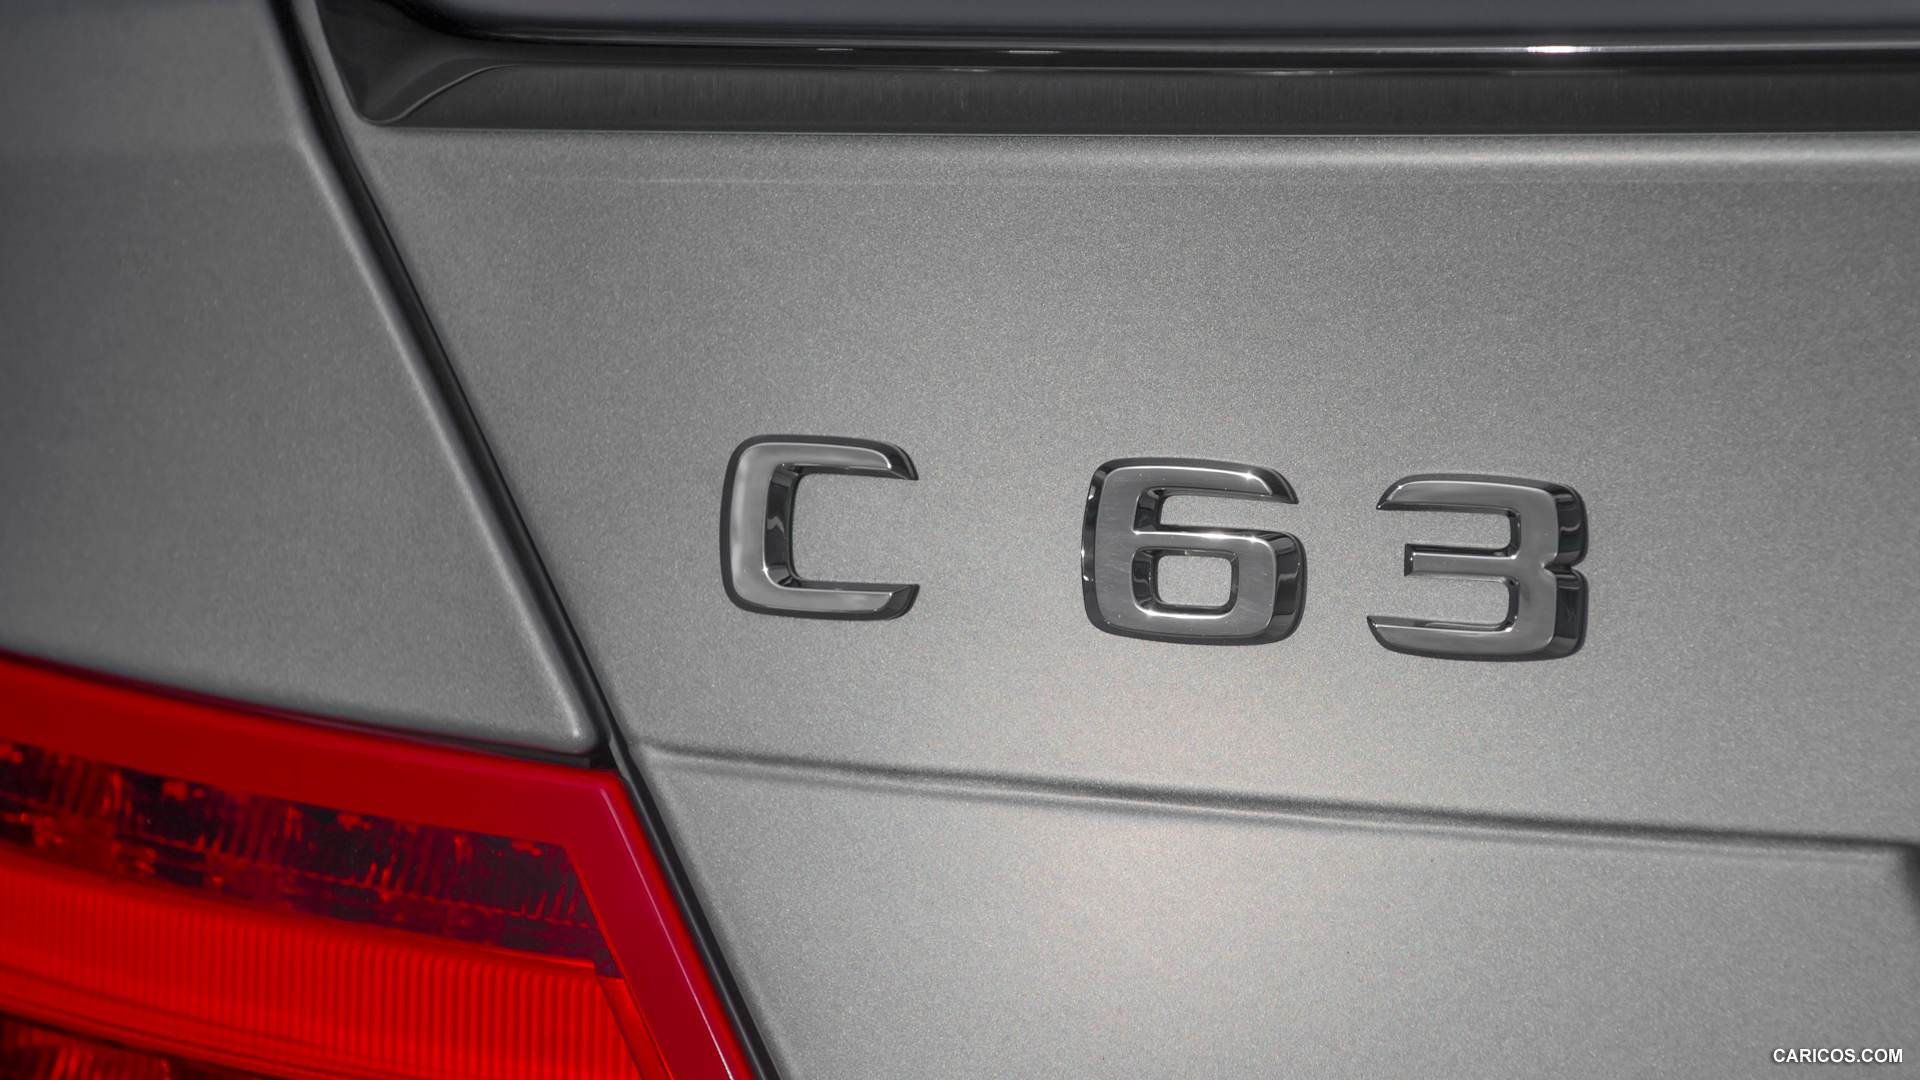 2014 Mercedes-Benz C 63 AMG Edition 507 Sedan (US Version)  - Badge, #9 of 15